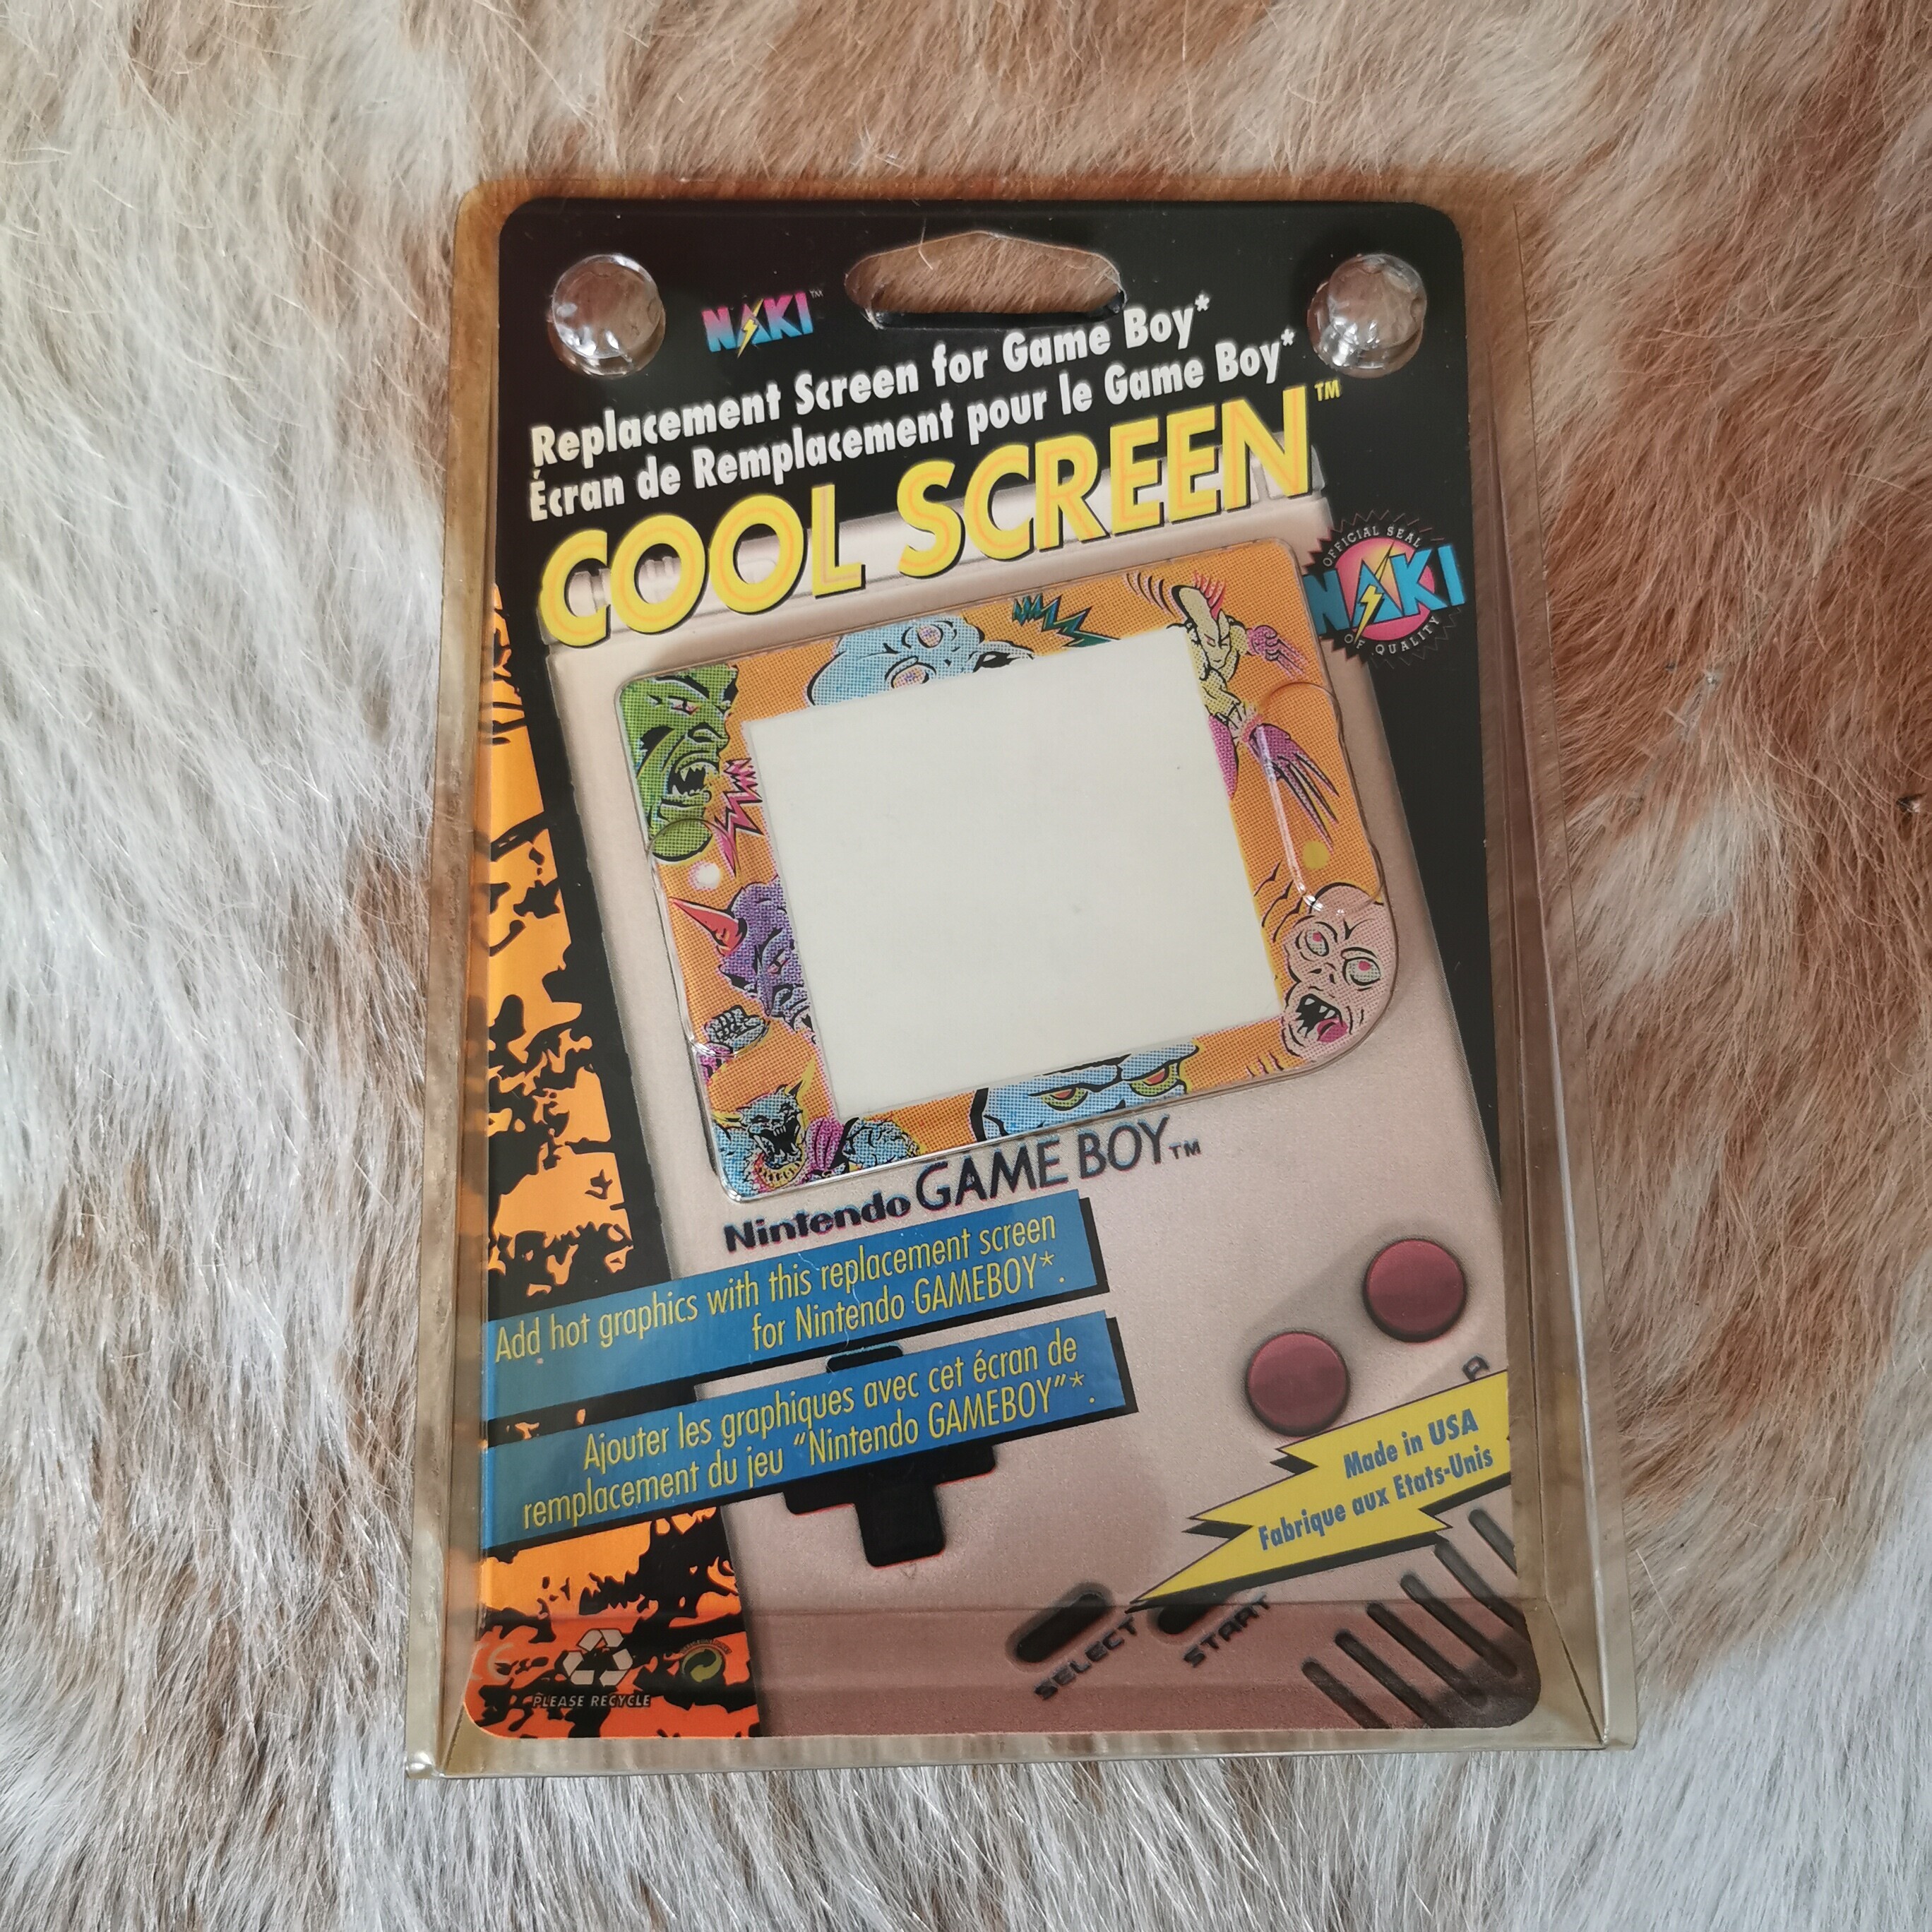  Naki Game Boy Cool Screen